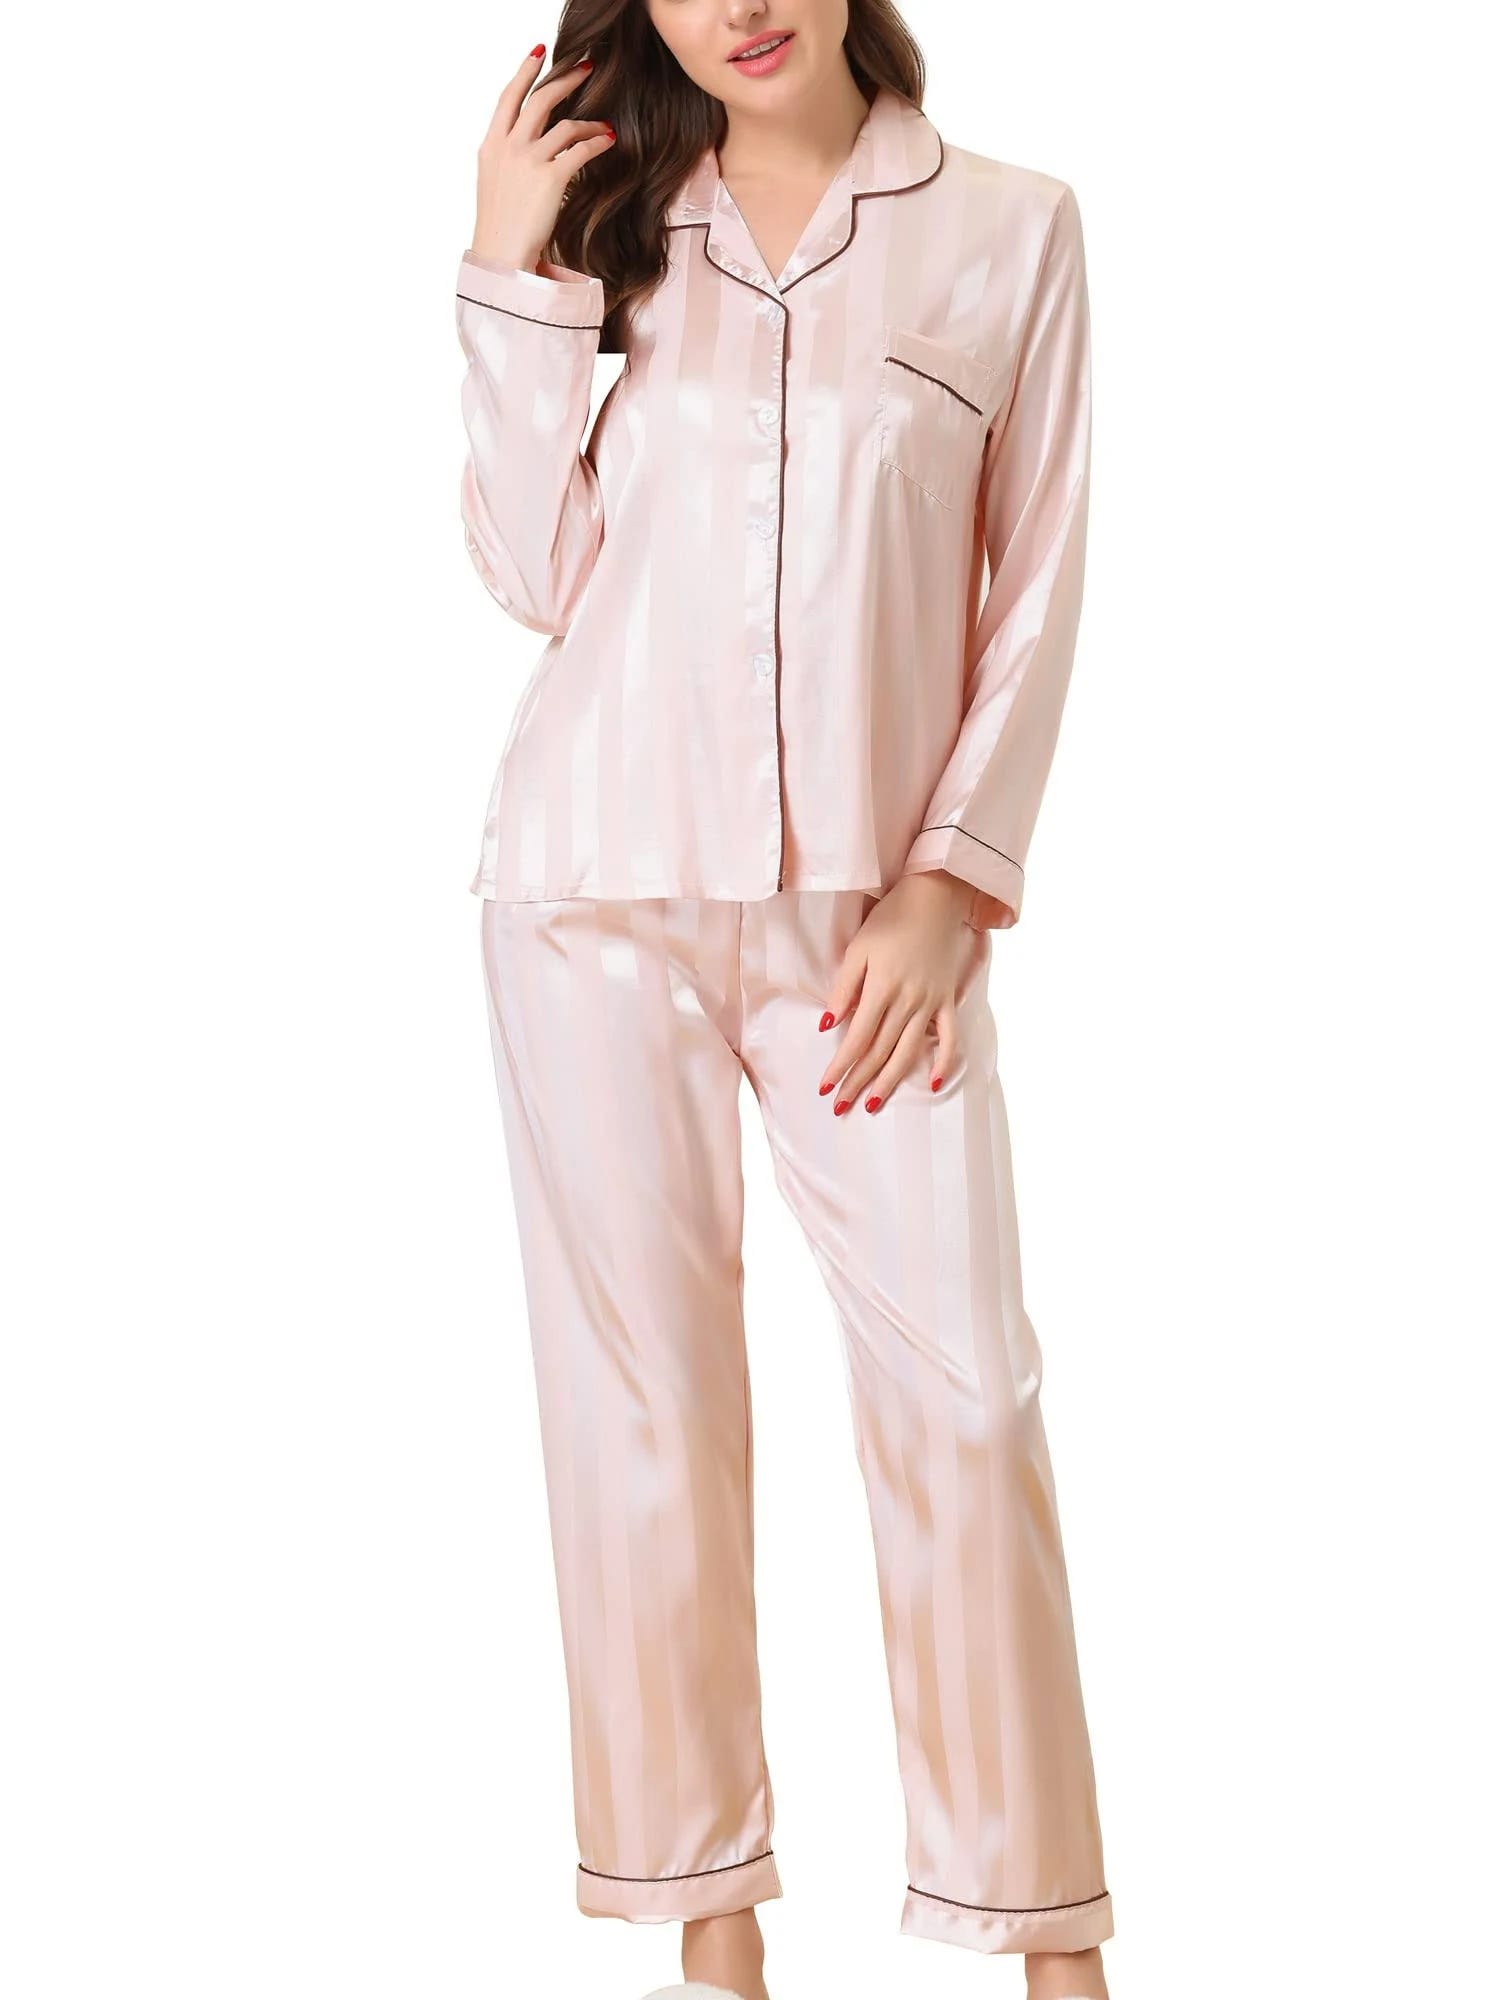 Luxurious Pink Satin Pajamas Set with Elastic Waist | Image